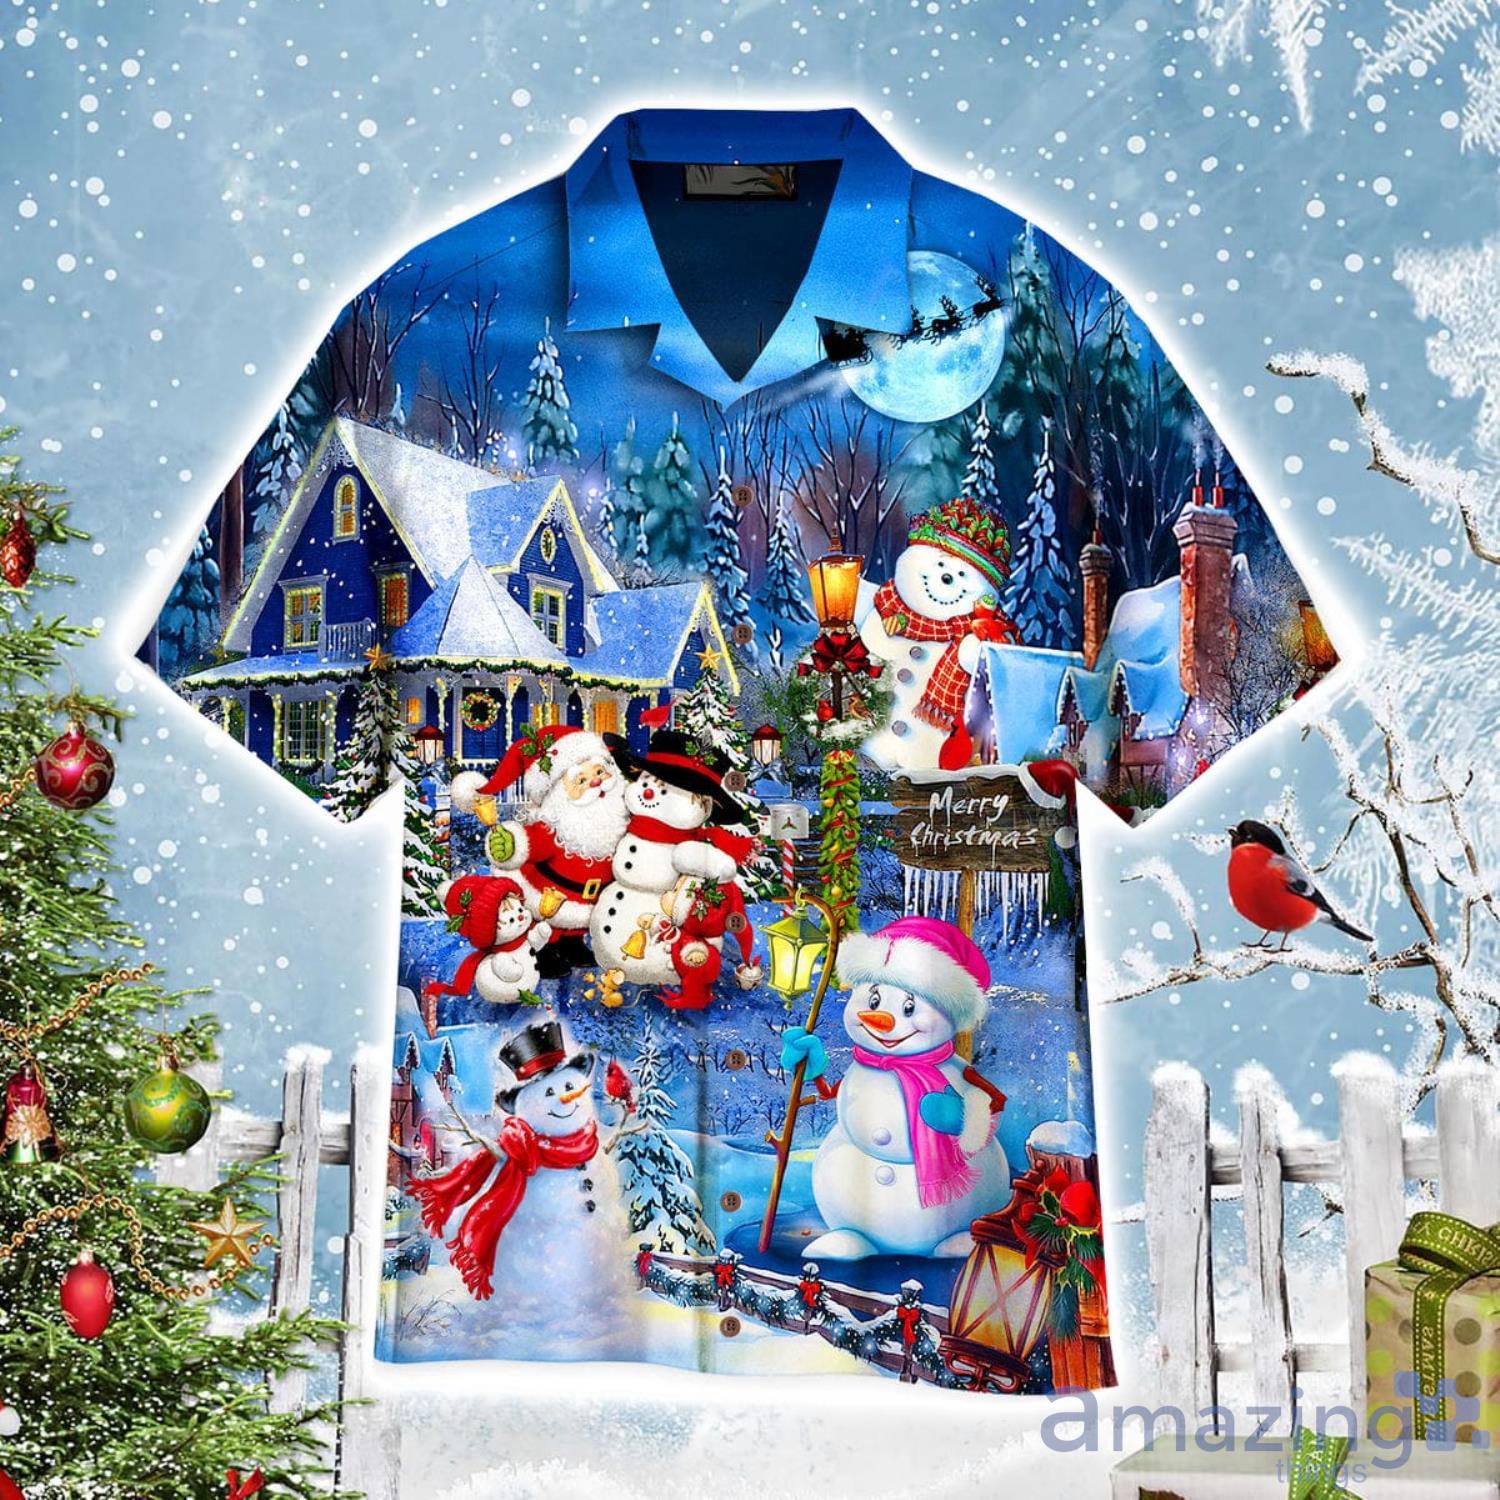 Merchize Bright Night Merry Christmas Hawaiian Shirt, 3D Colorful Christmas Tree Shirt, Best Gift for Christmas